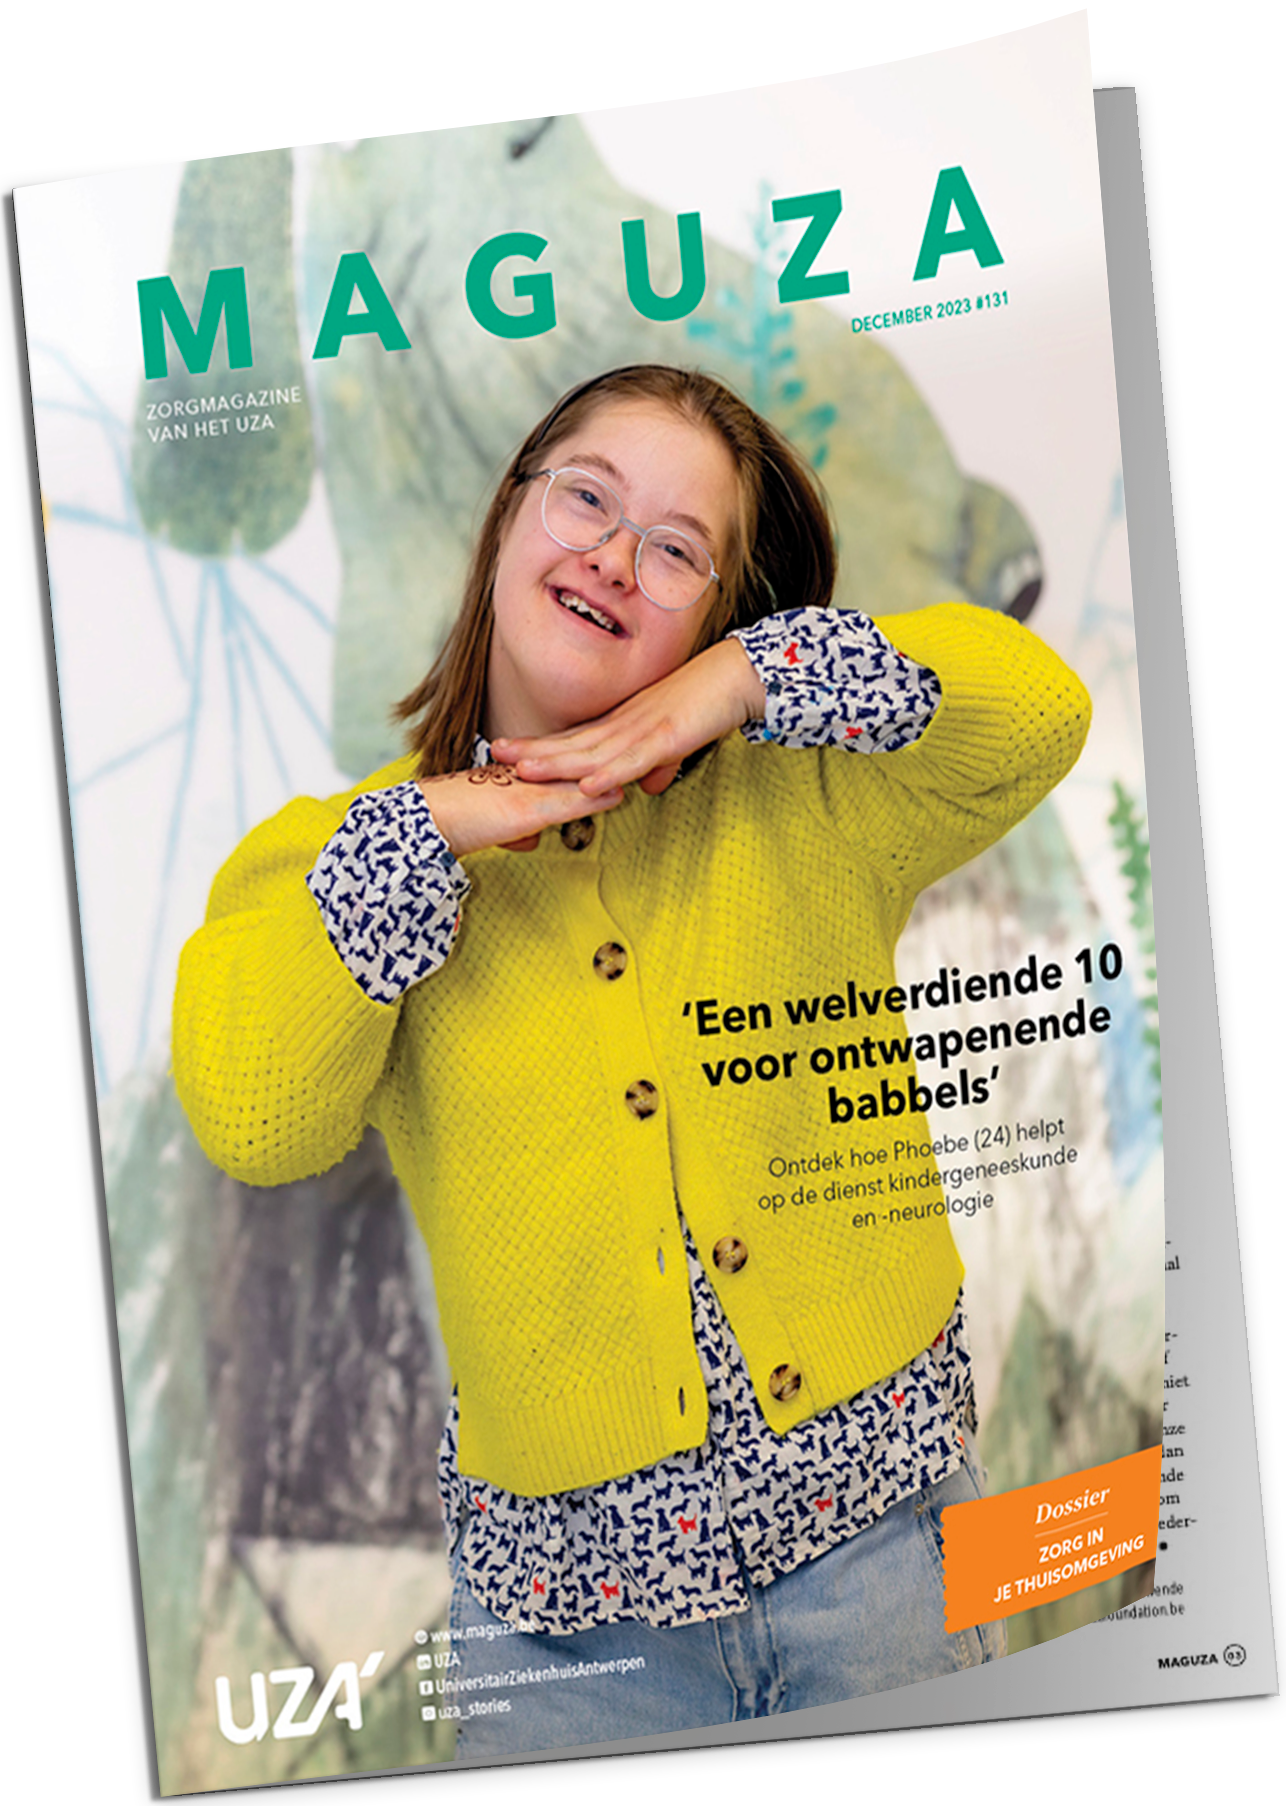 Maguza magazine 131